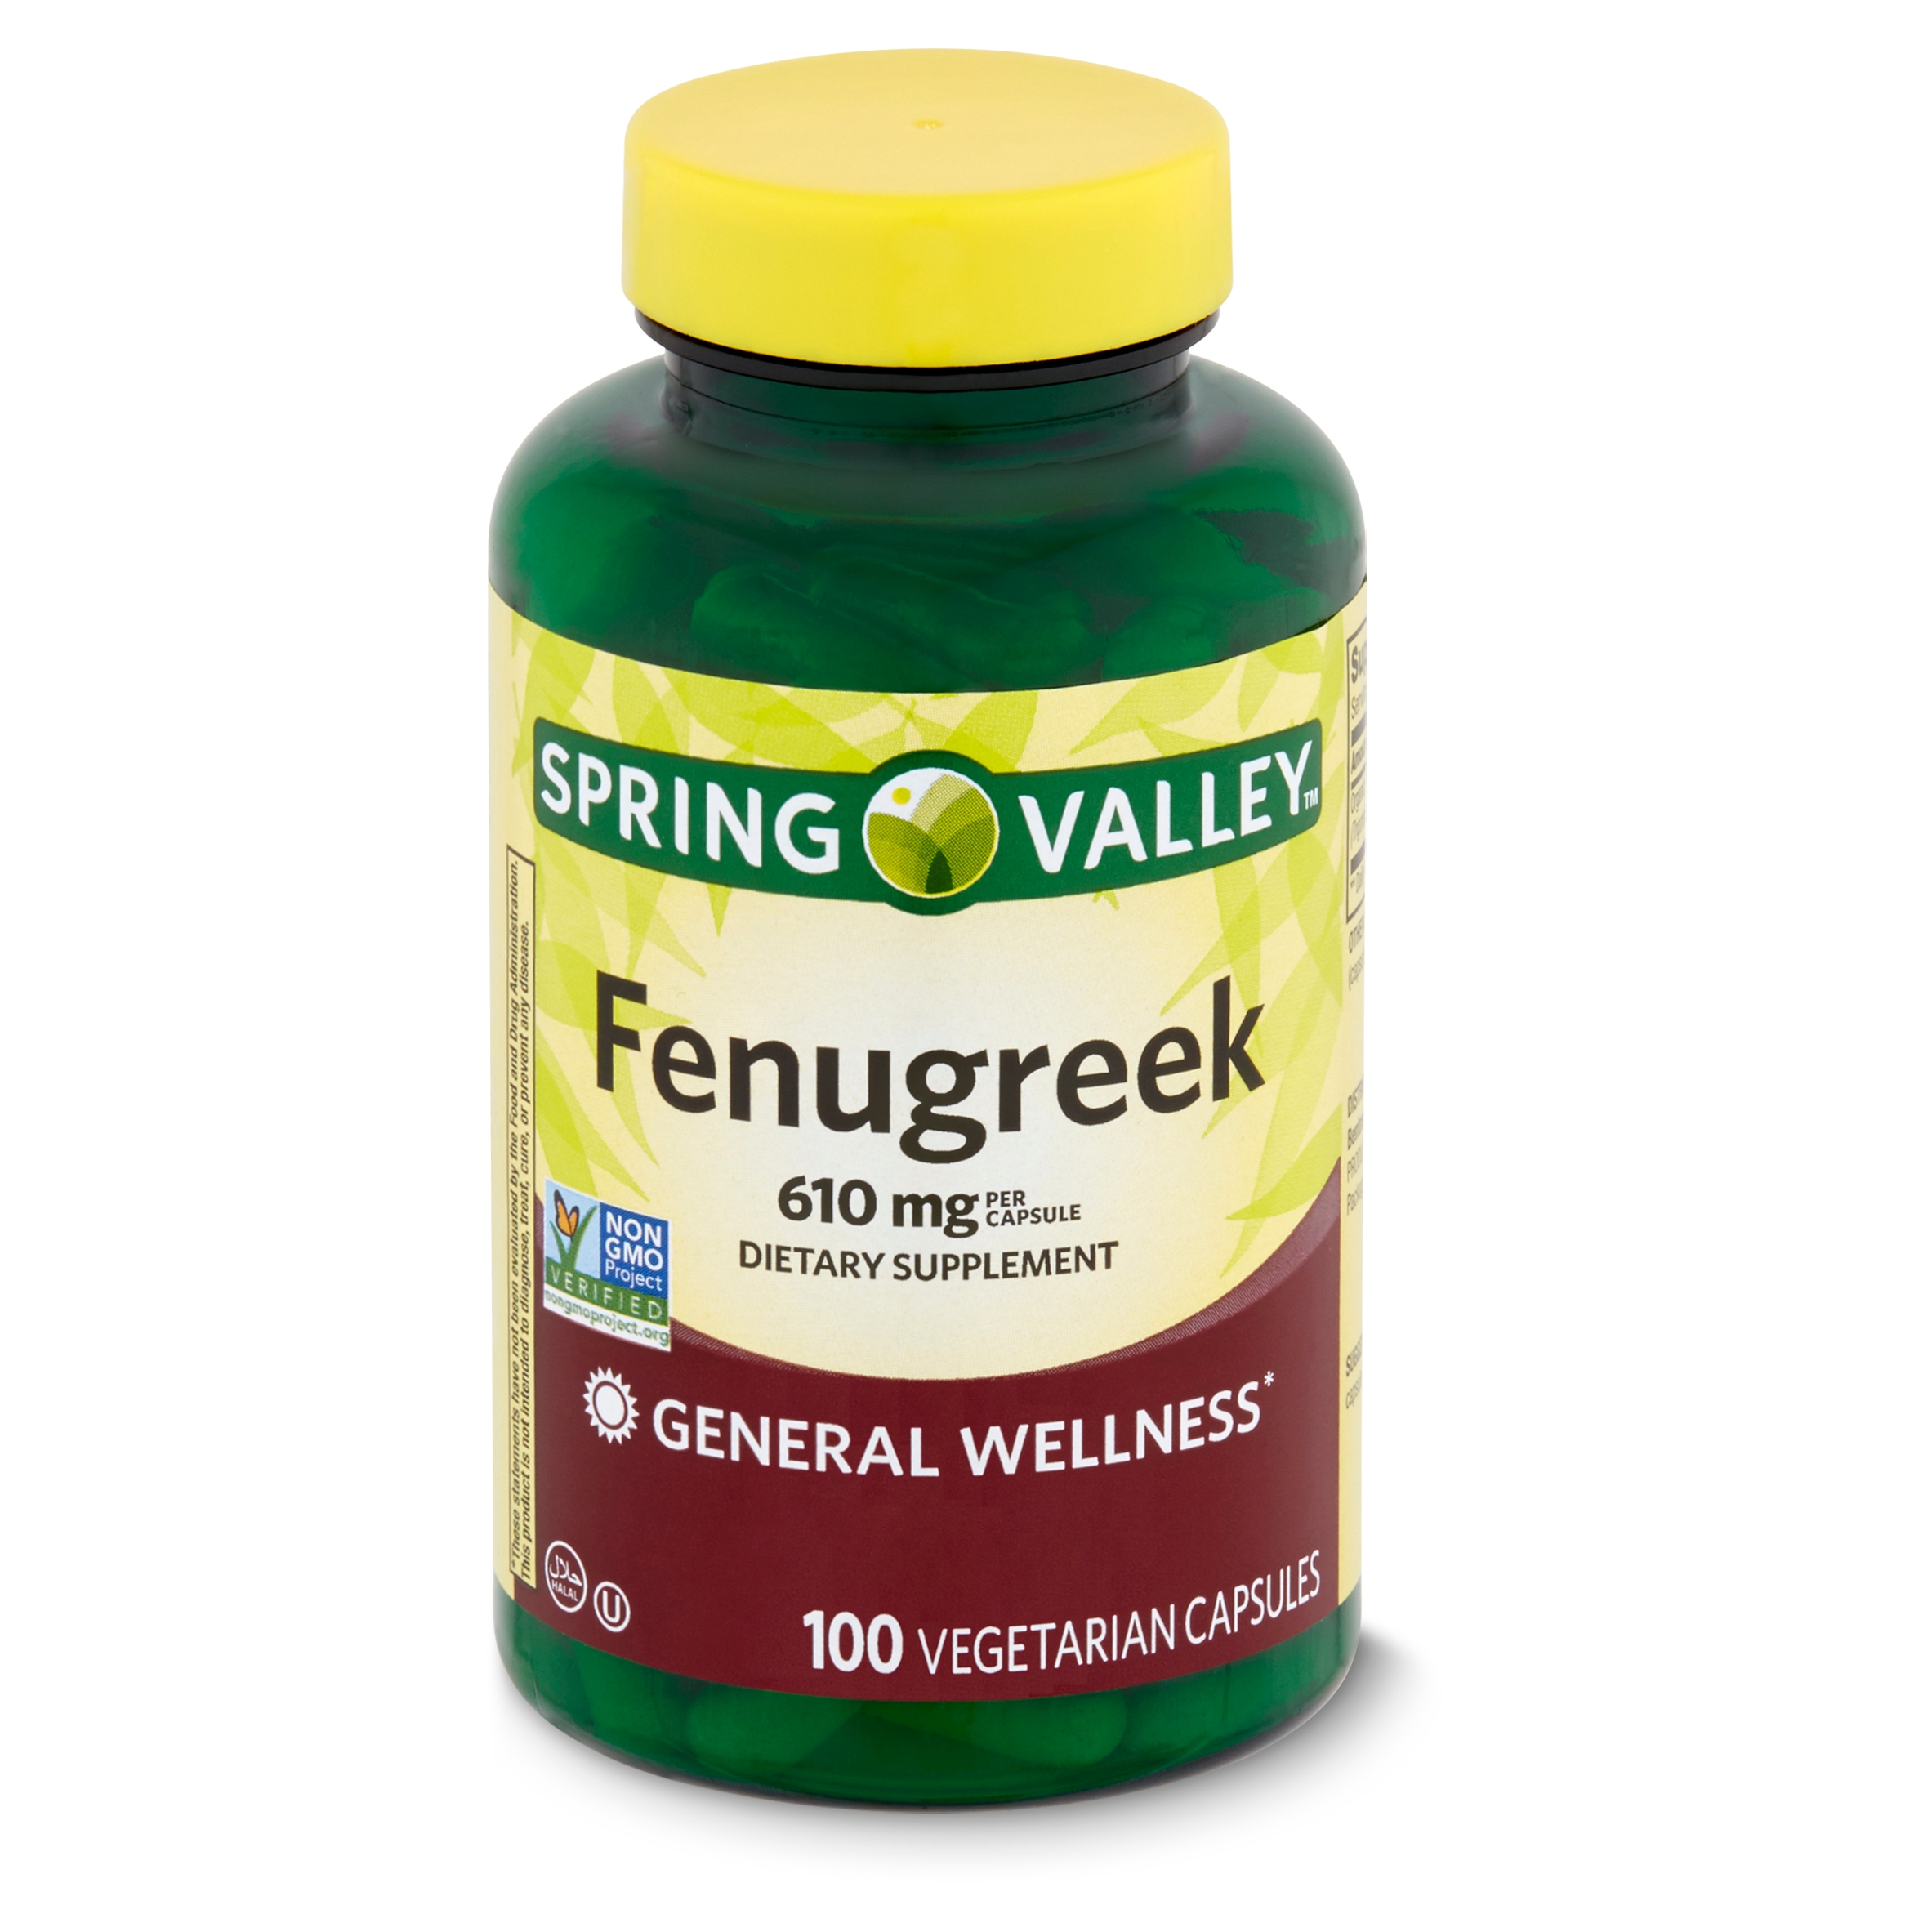 Spring Valley Fenugreek General Wellness Dietary Supplement Vegetarian Capsules, 610 mg, 100 Count - image 1 of 8